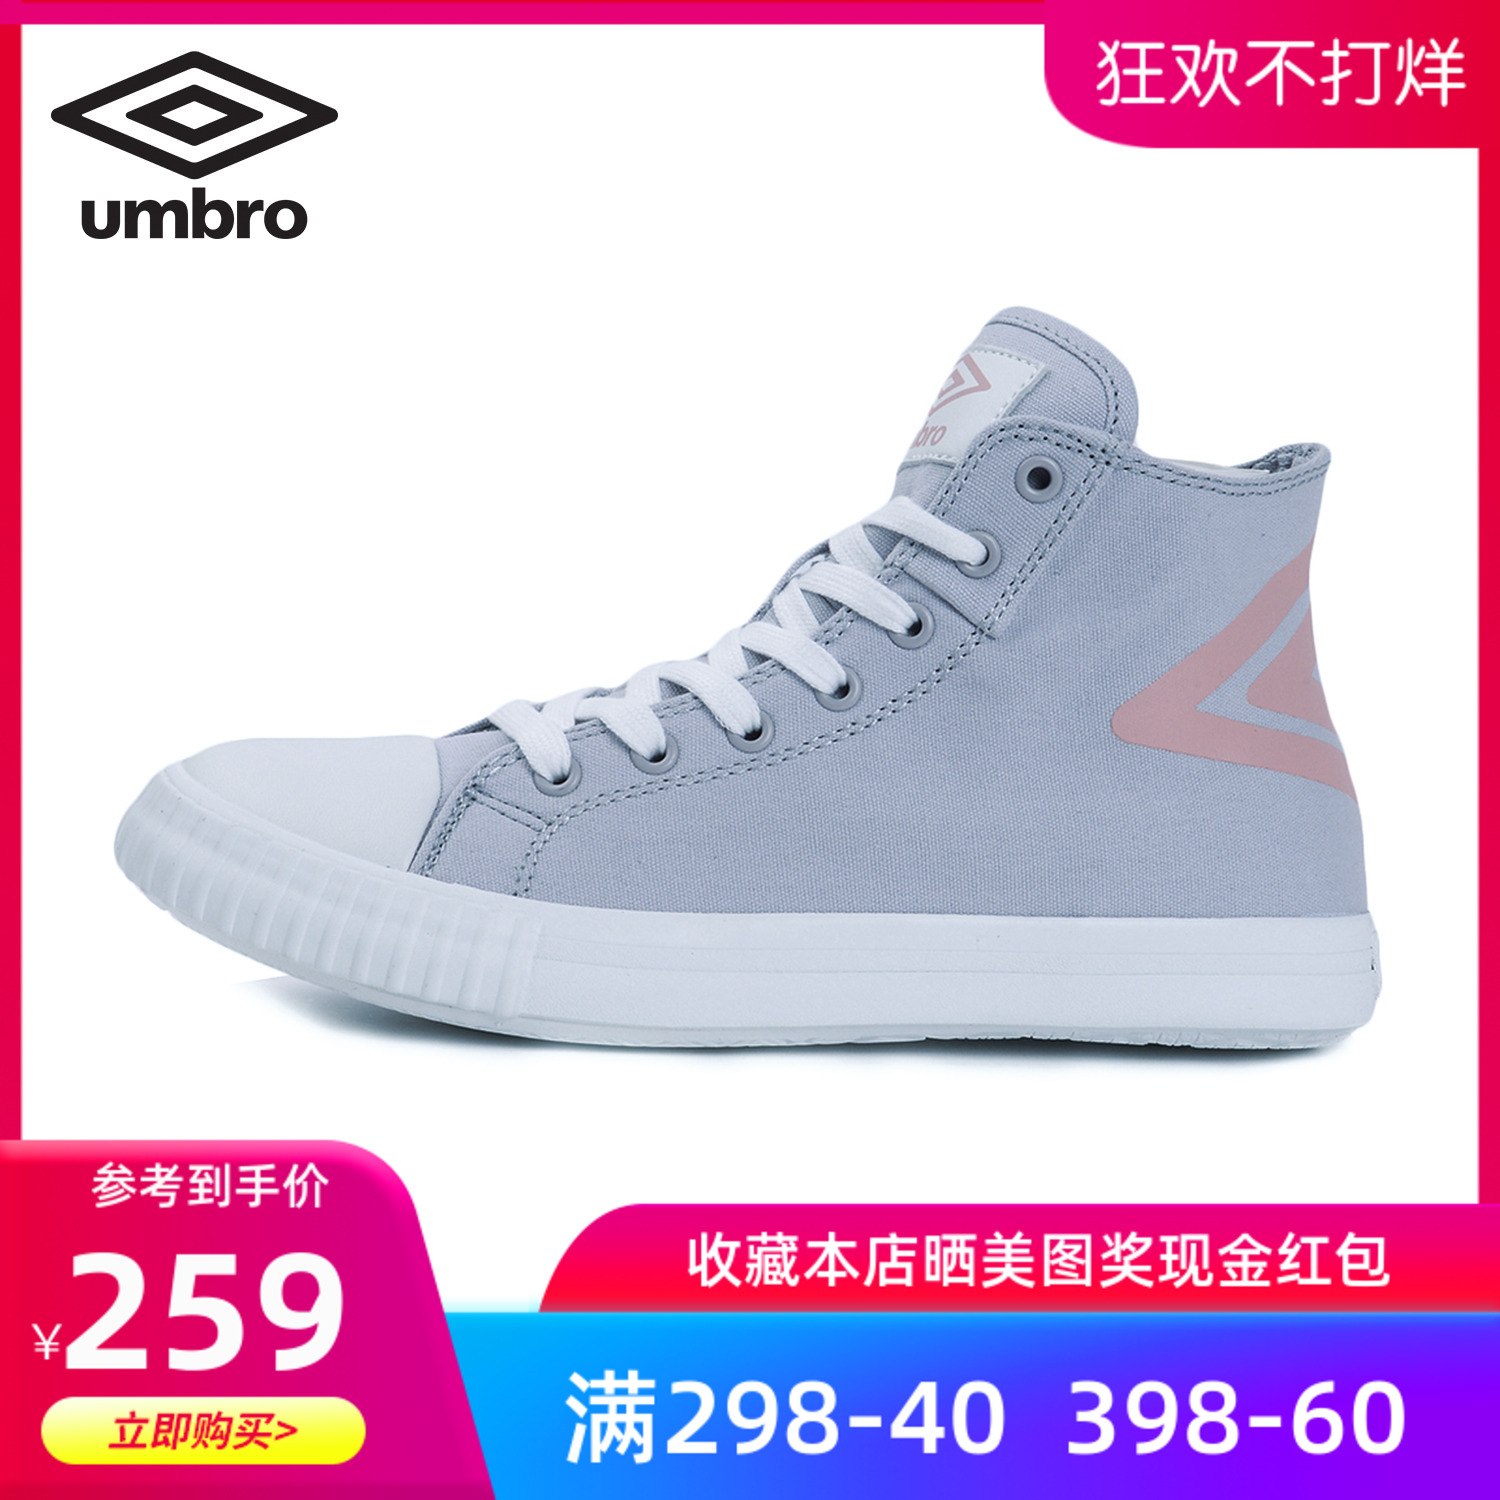 Umbro/Yinbao 2019 Spring Women's Shoes High Top Classic Vulcanized Shoes Sports Casual Shoes Couple Cricket Shoes